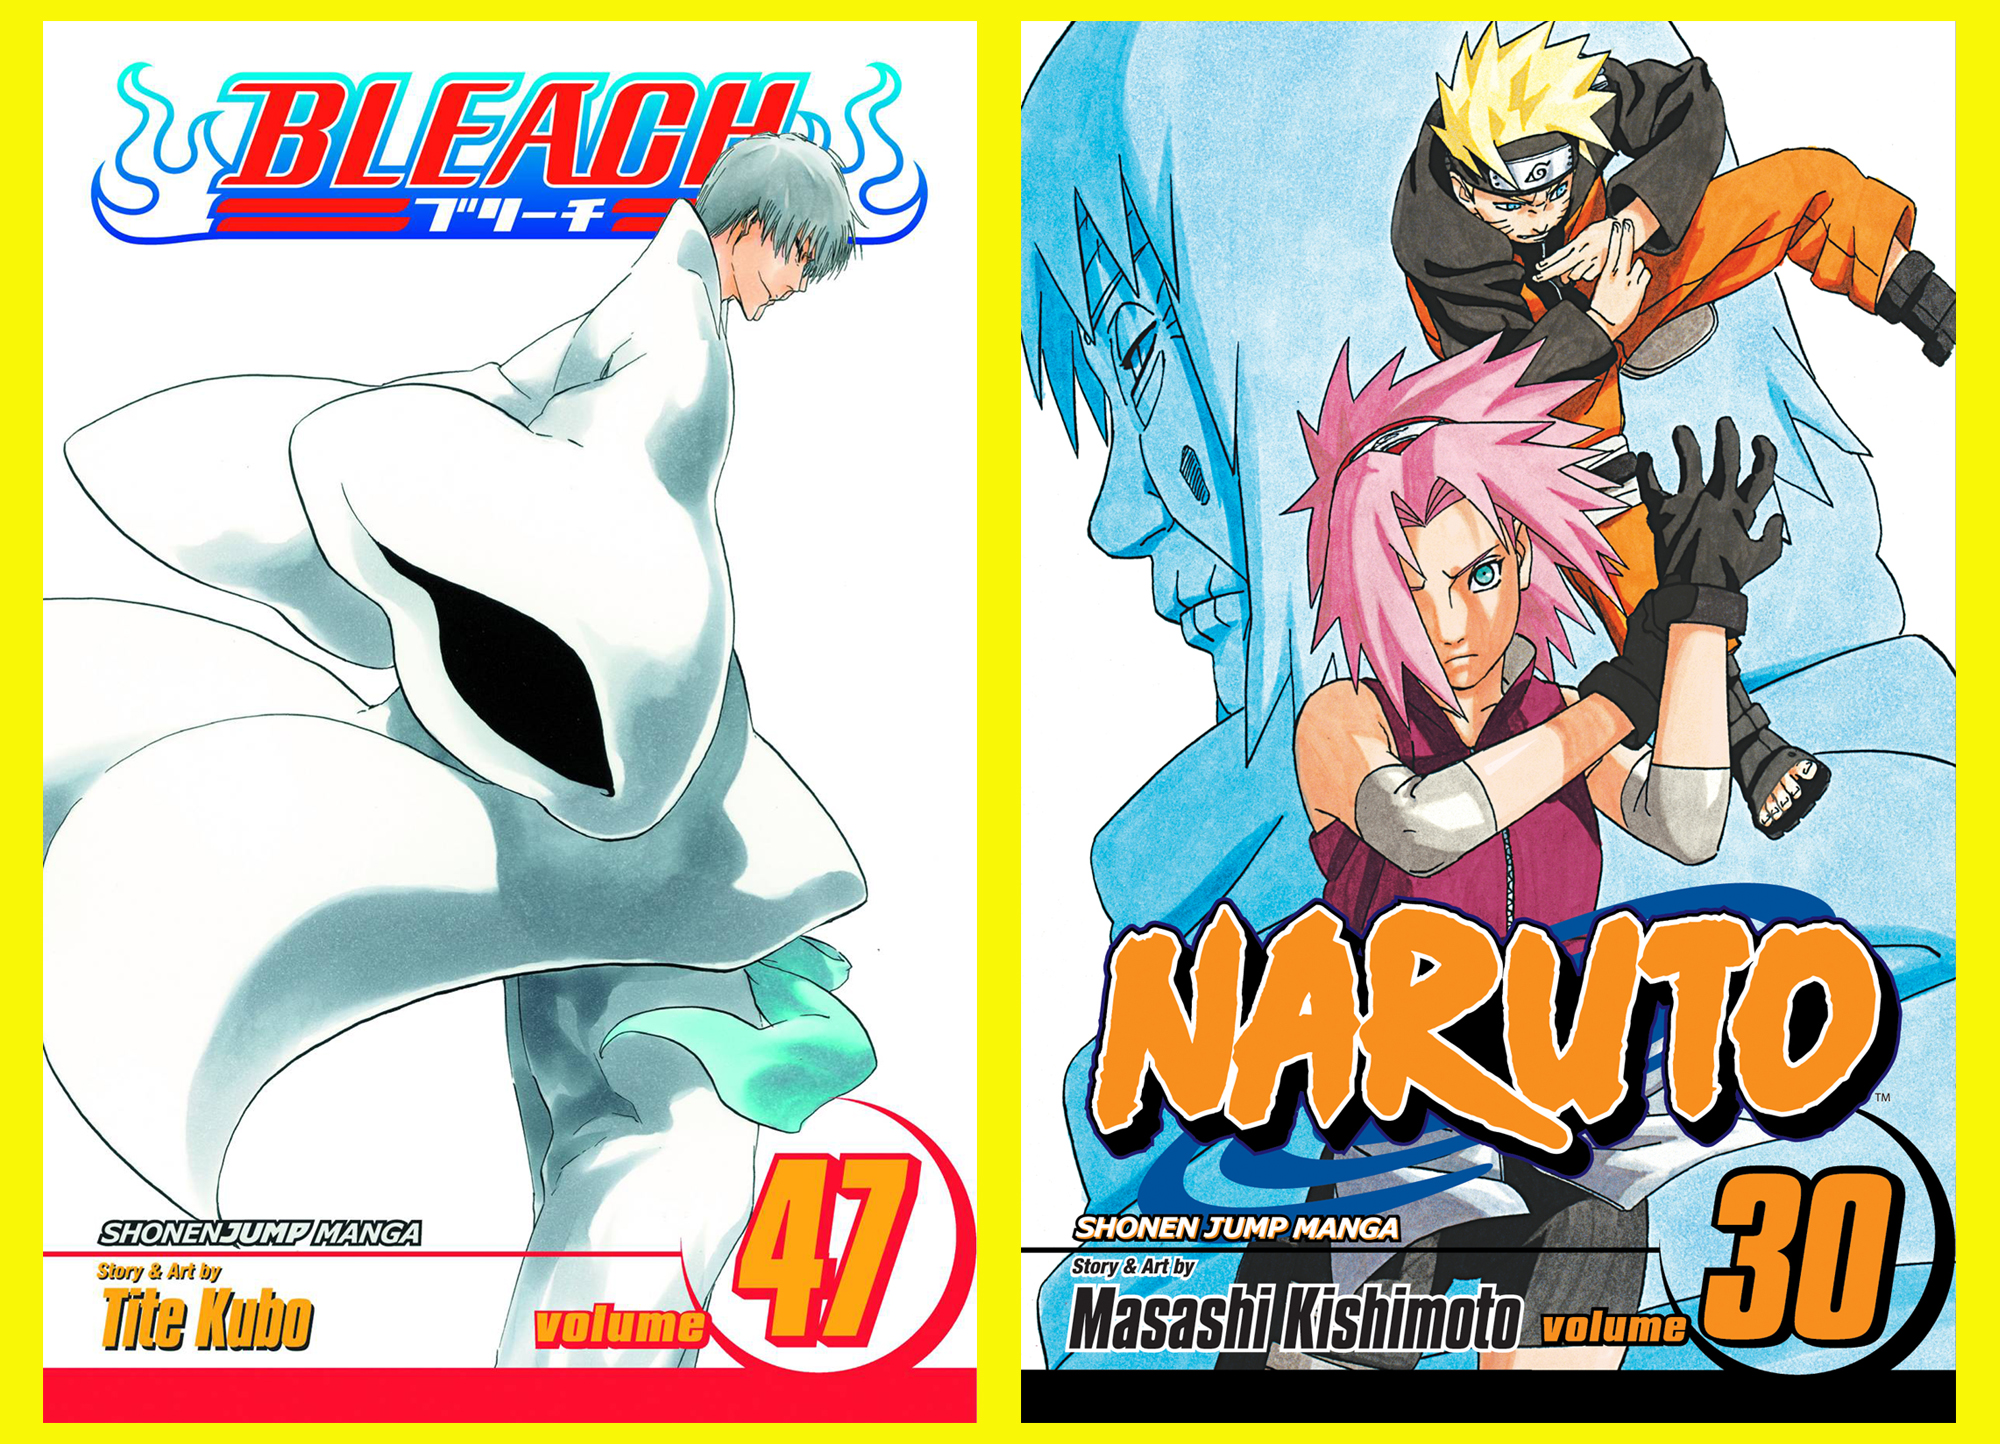 New Bleach and Naruto Manga Box Sets to Debut July 2015, Merchandise